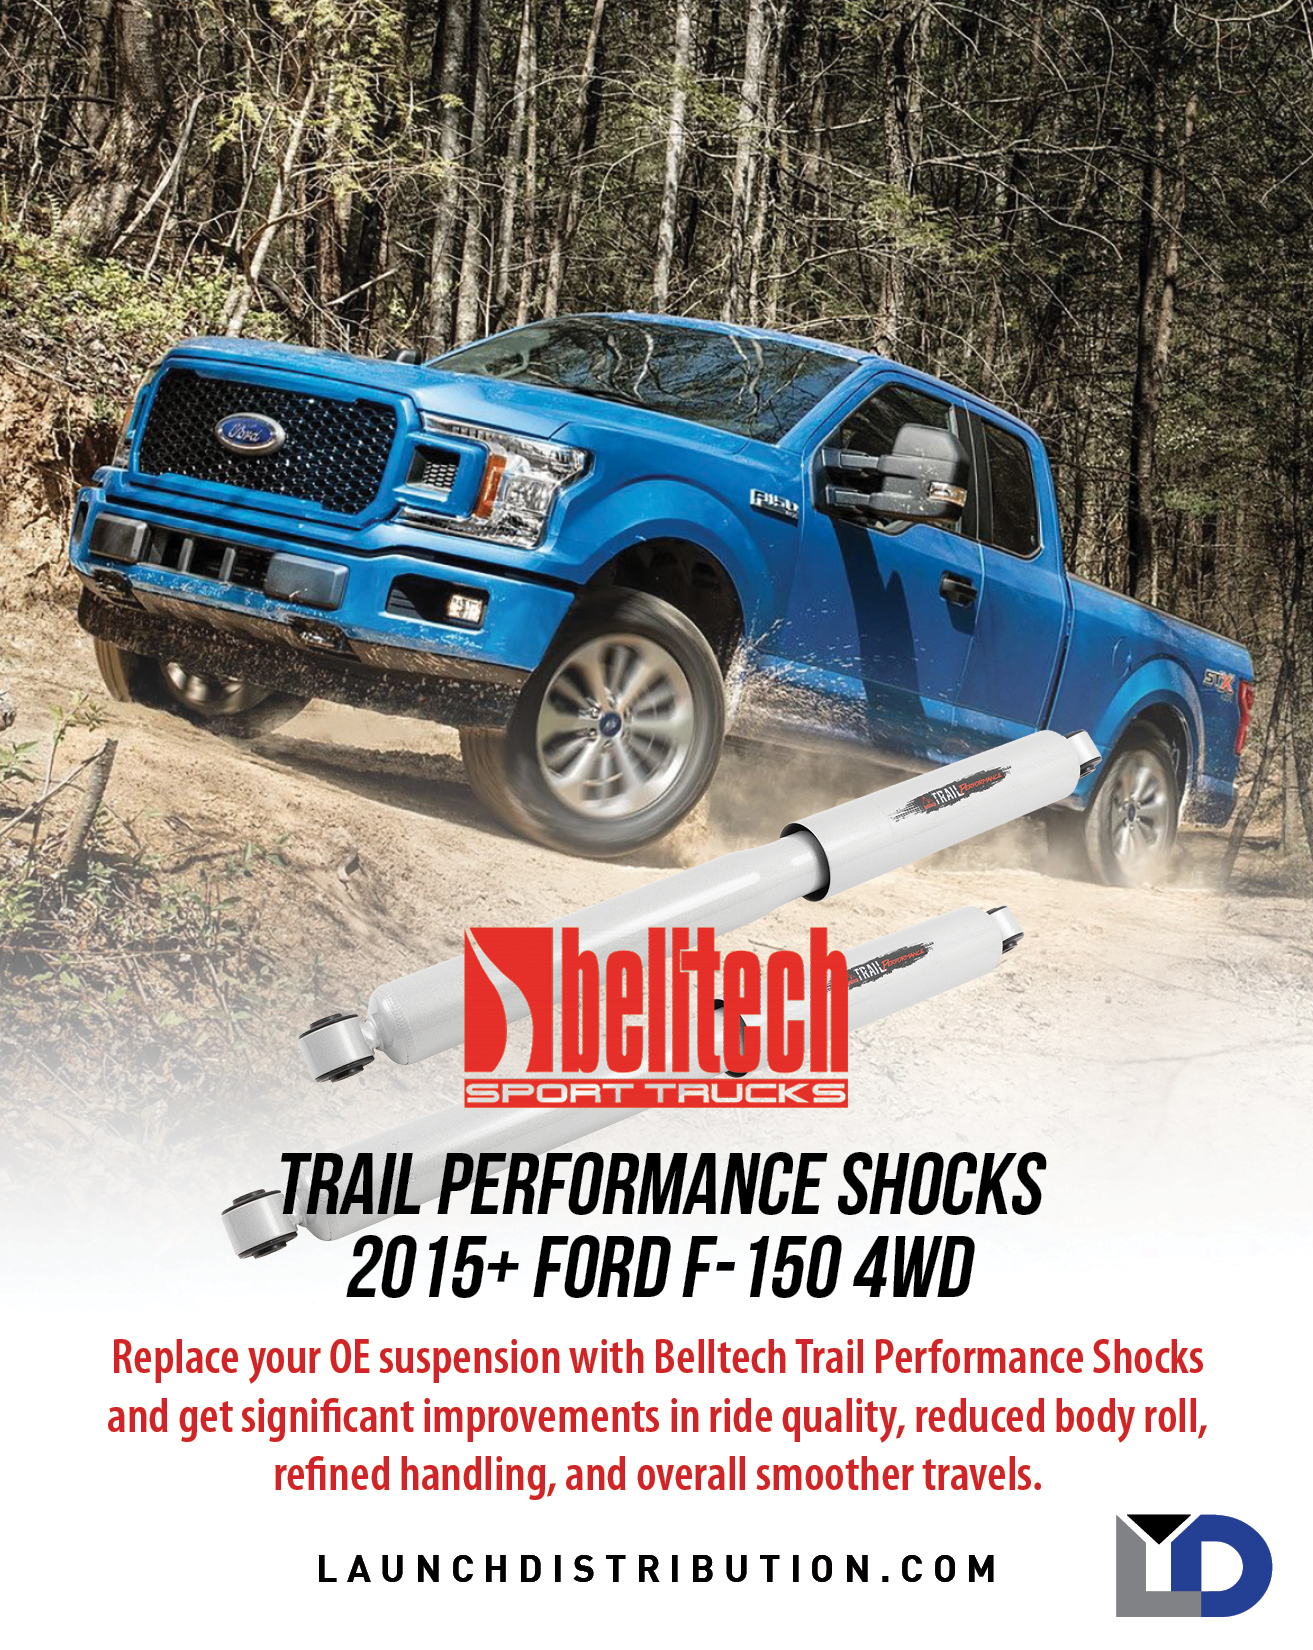 Belltech Trail Performance Shocks